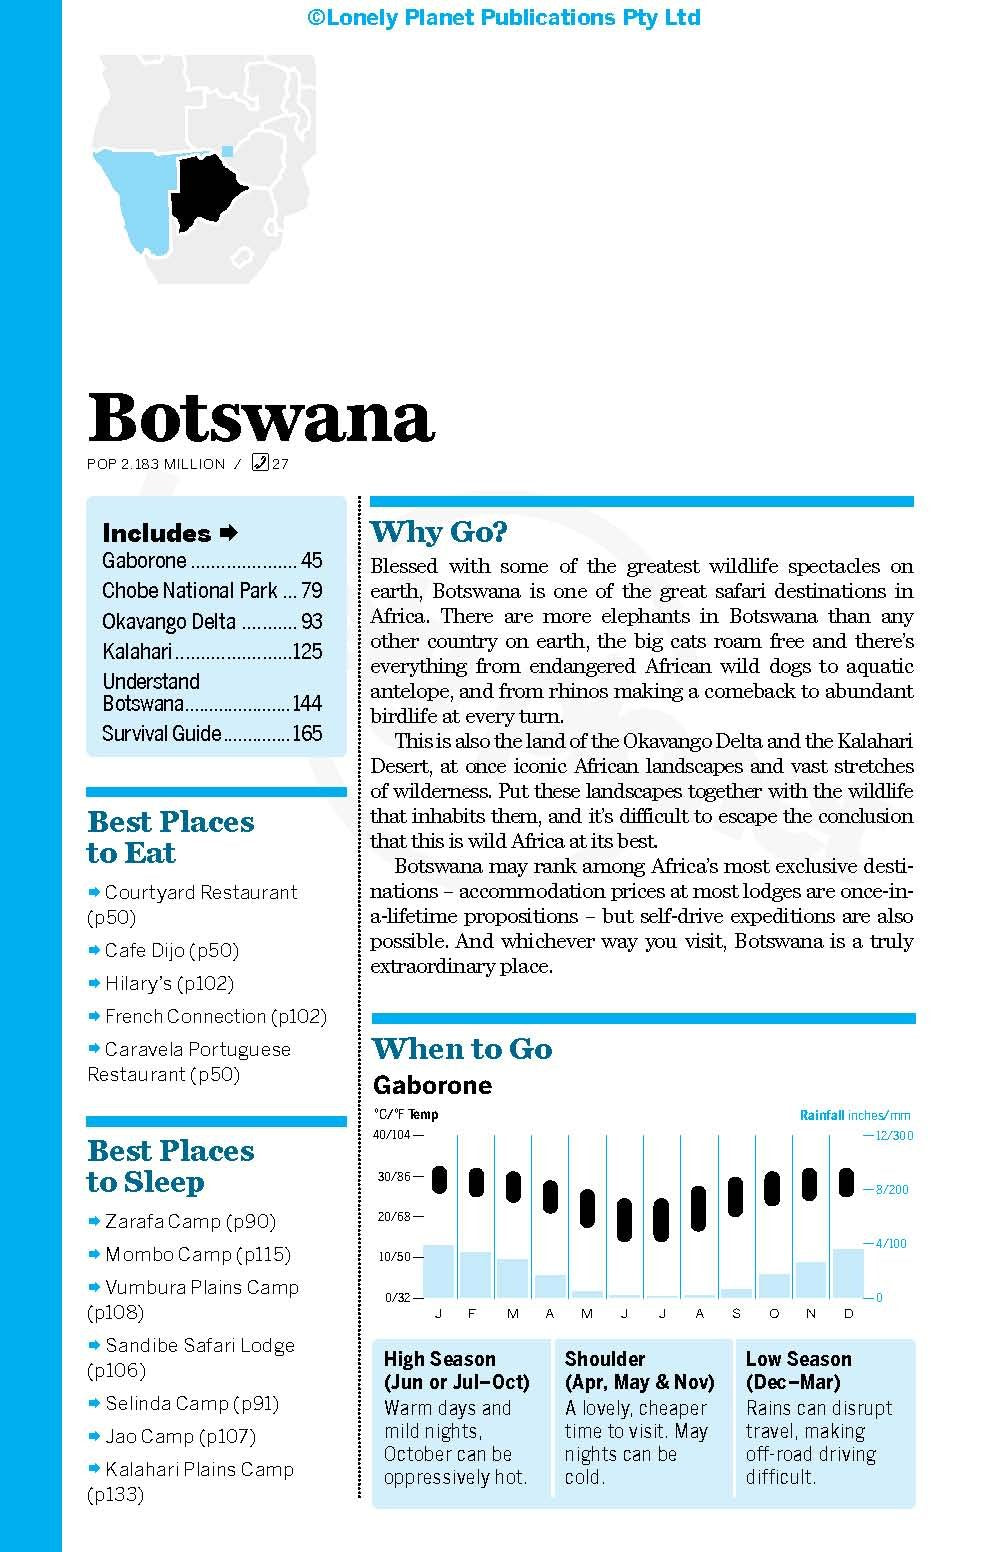 Guide de voyage (en anglais) - Botswana & Namibia | Lonely Planet guide de voyage Lonely Planet 